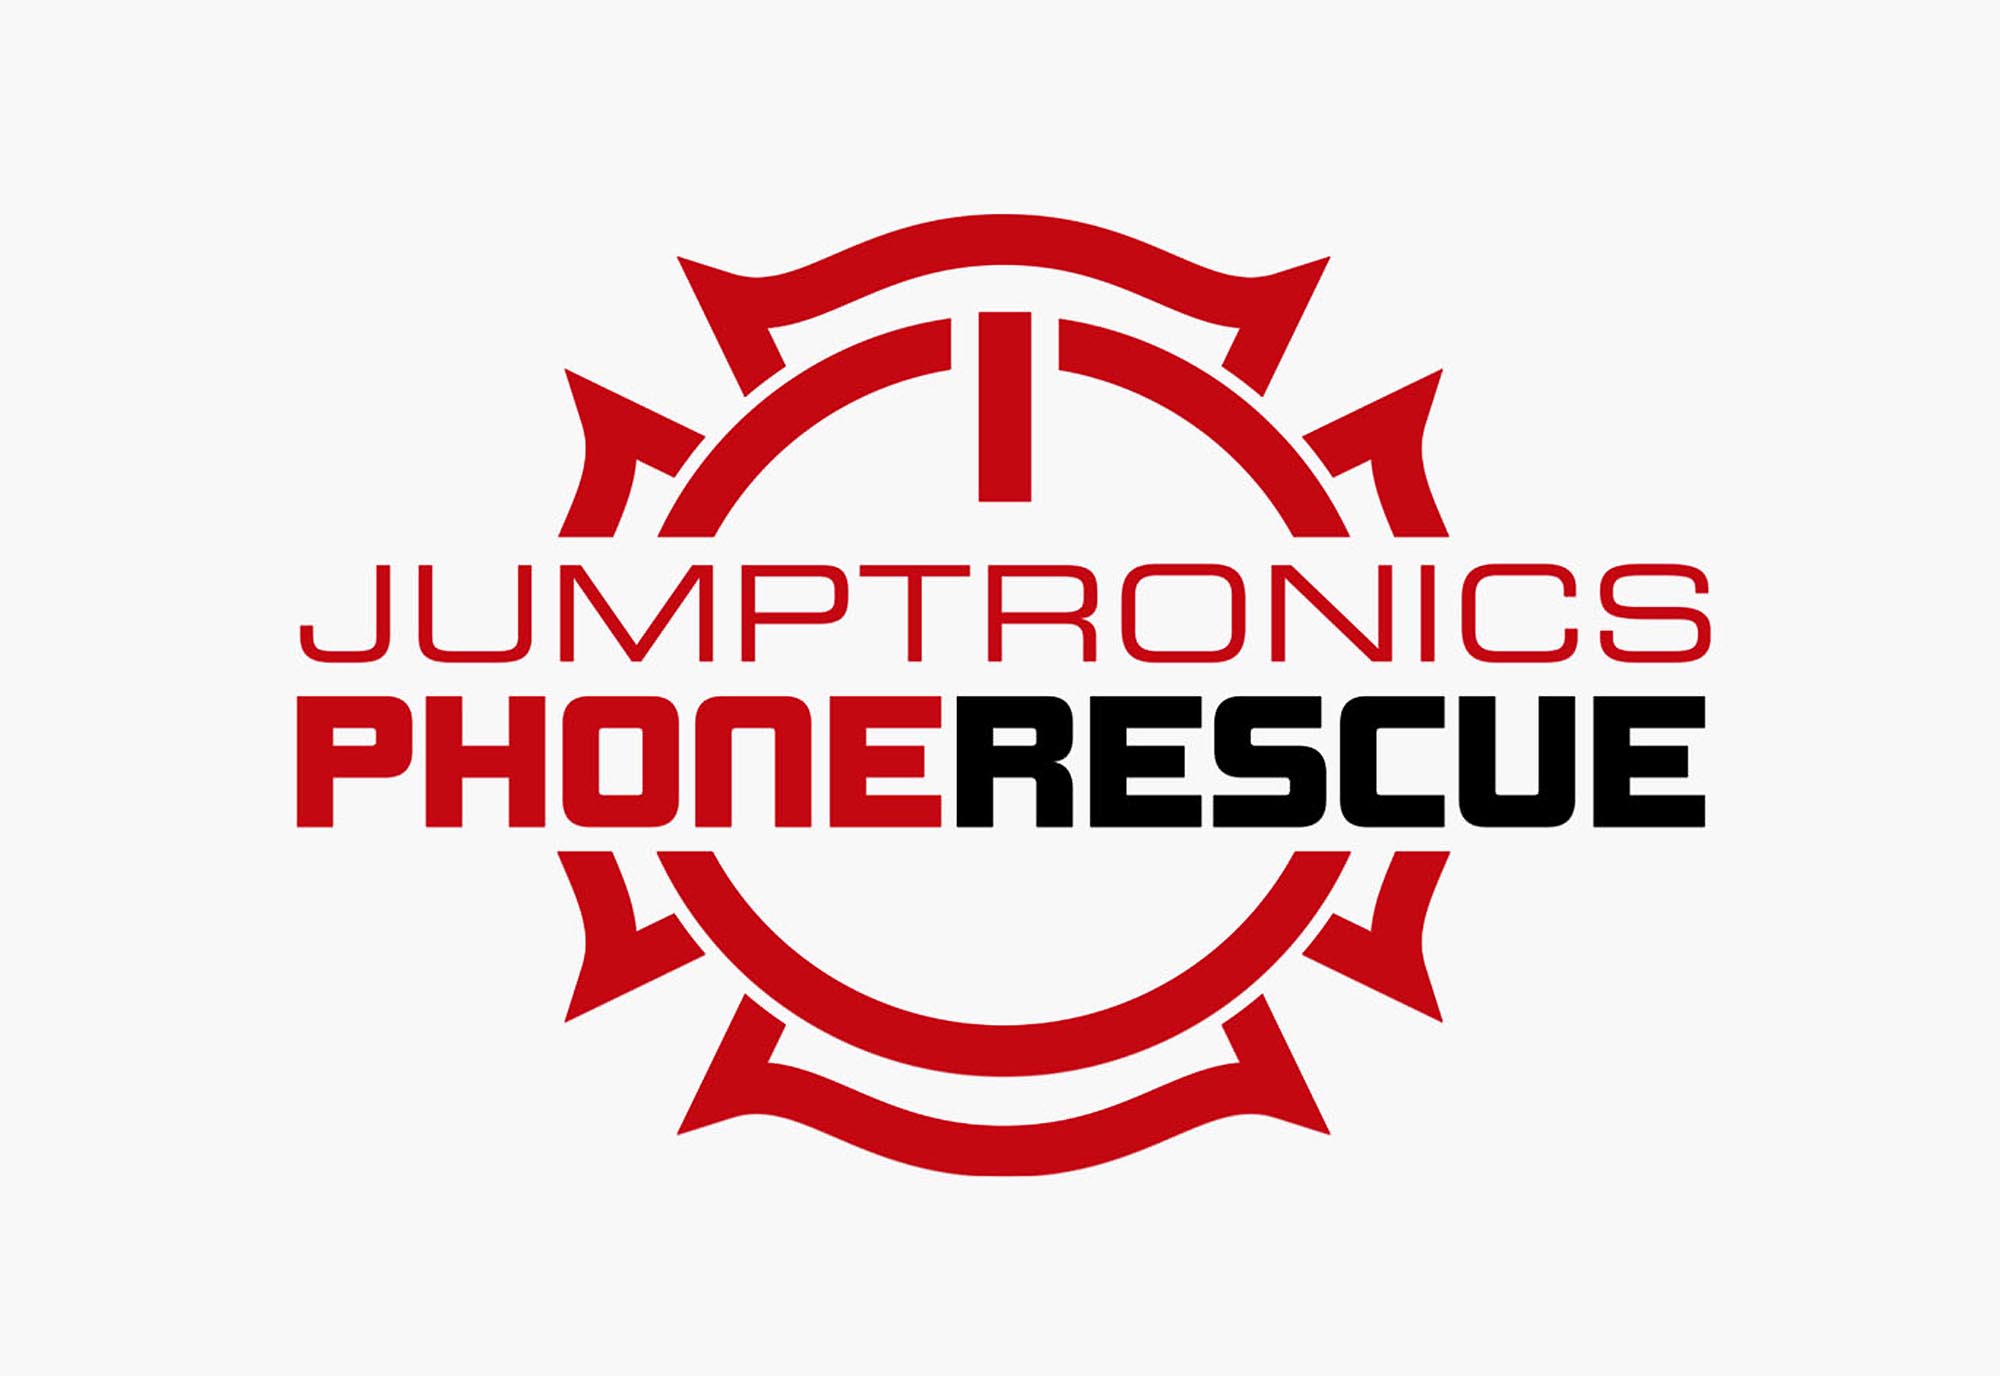 Jumptronics Phone Repair is an online mobile phone repair shop based in Oklahoma, USA